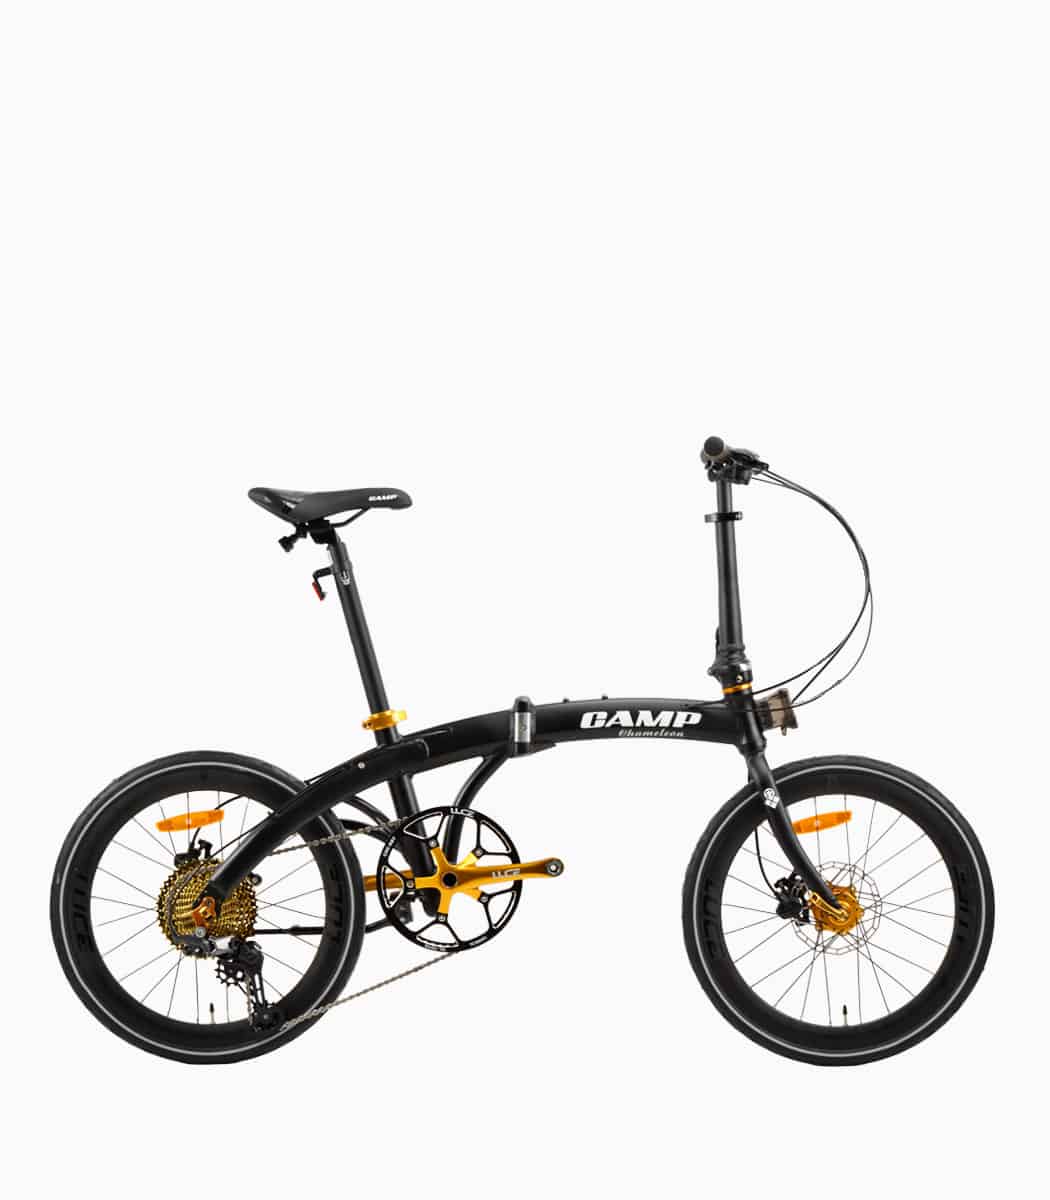 CAMP Chameleon GT (MATT BLACK) foldable bicycle right